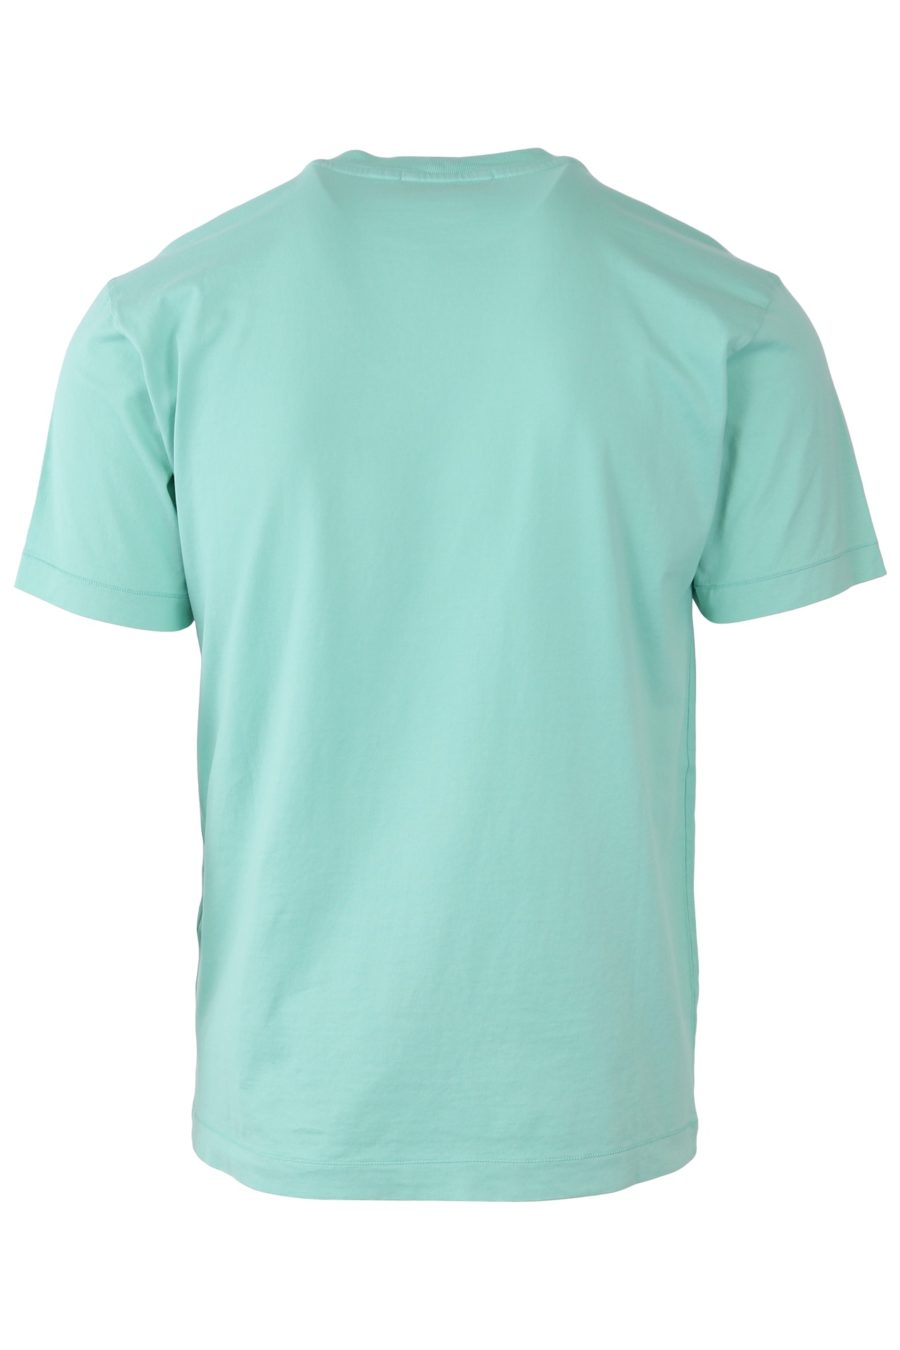 Camiseta Stone Island color menta con logo parche - edcd2b3f5a8a2da6533e49fa51dfcb2d9cd4b246